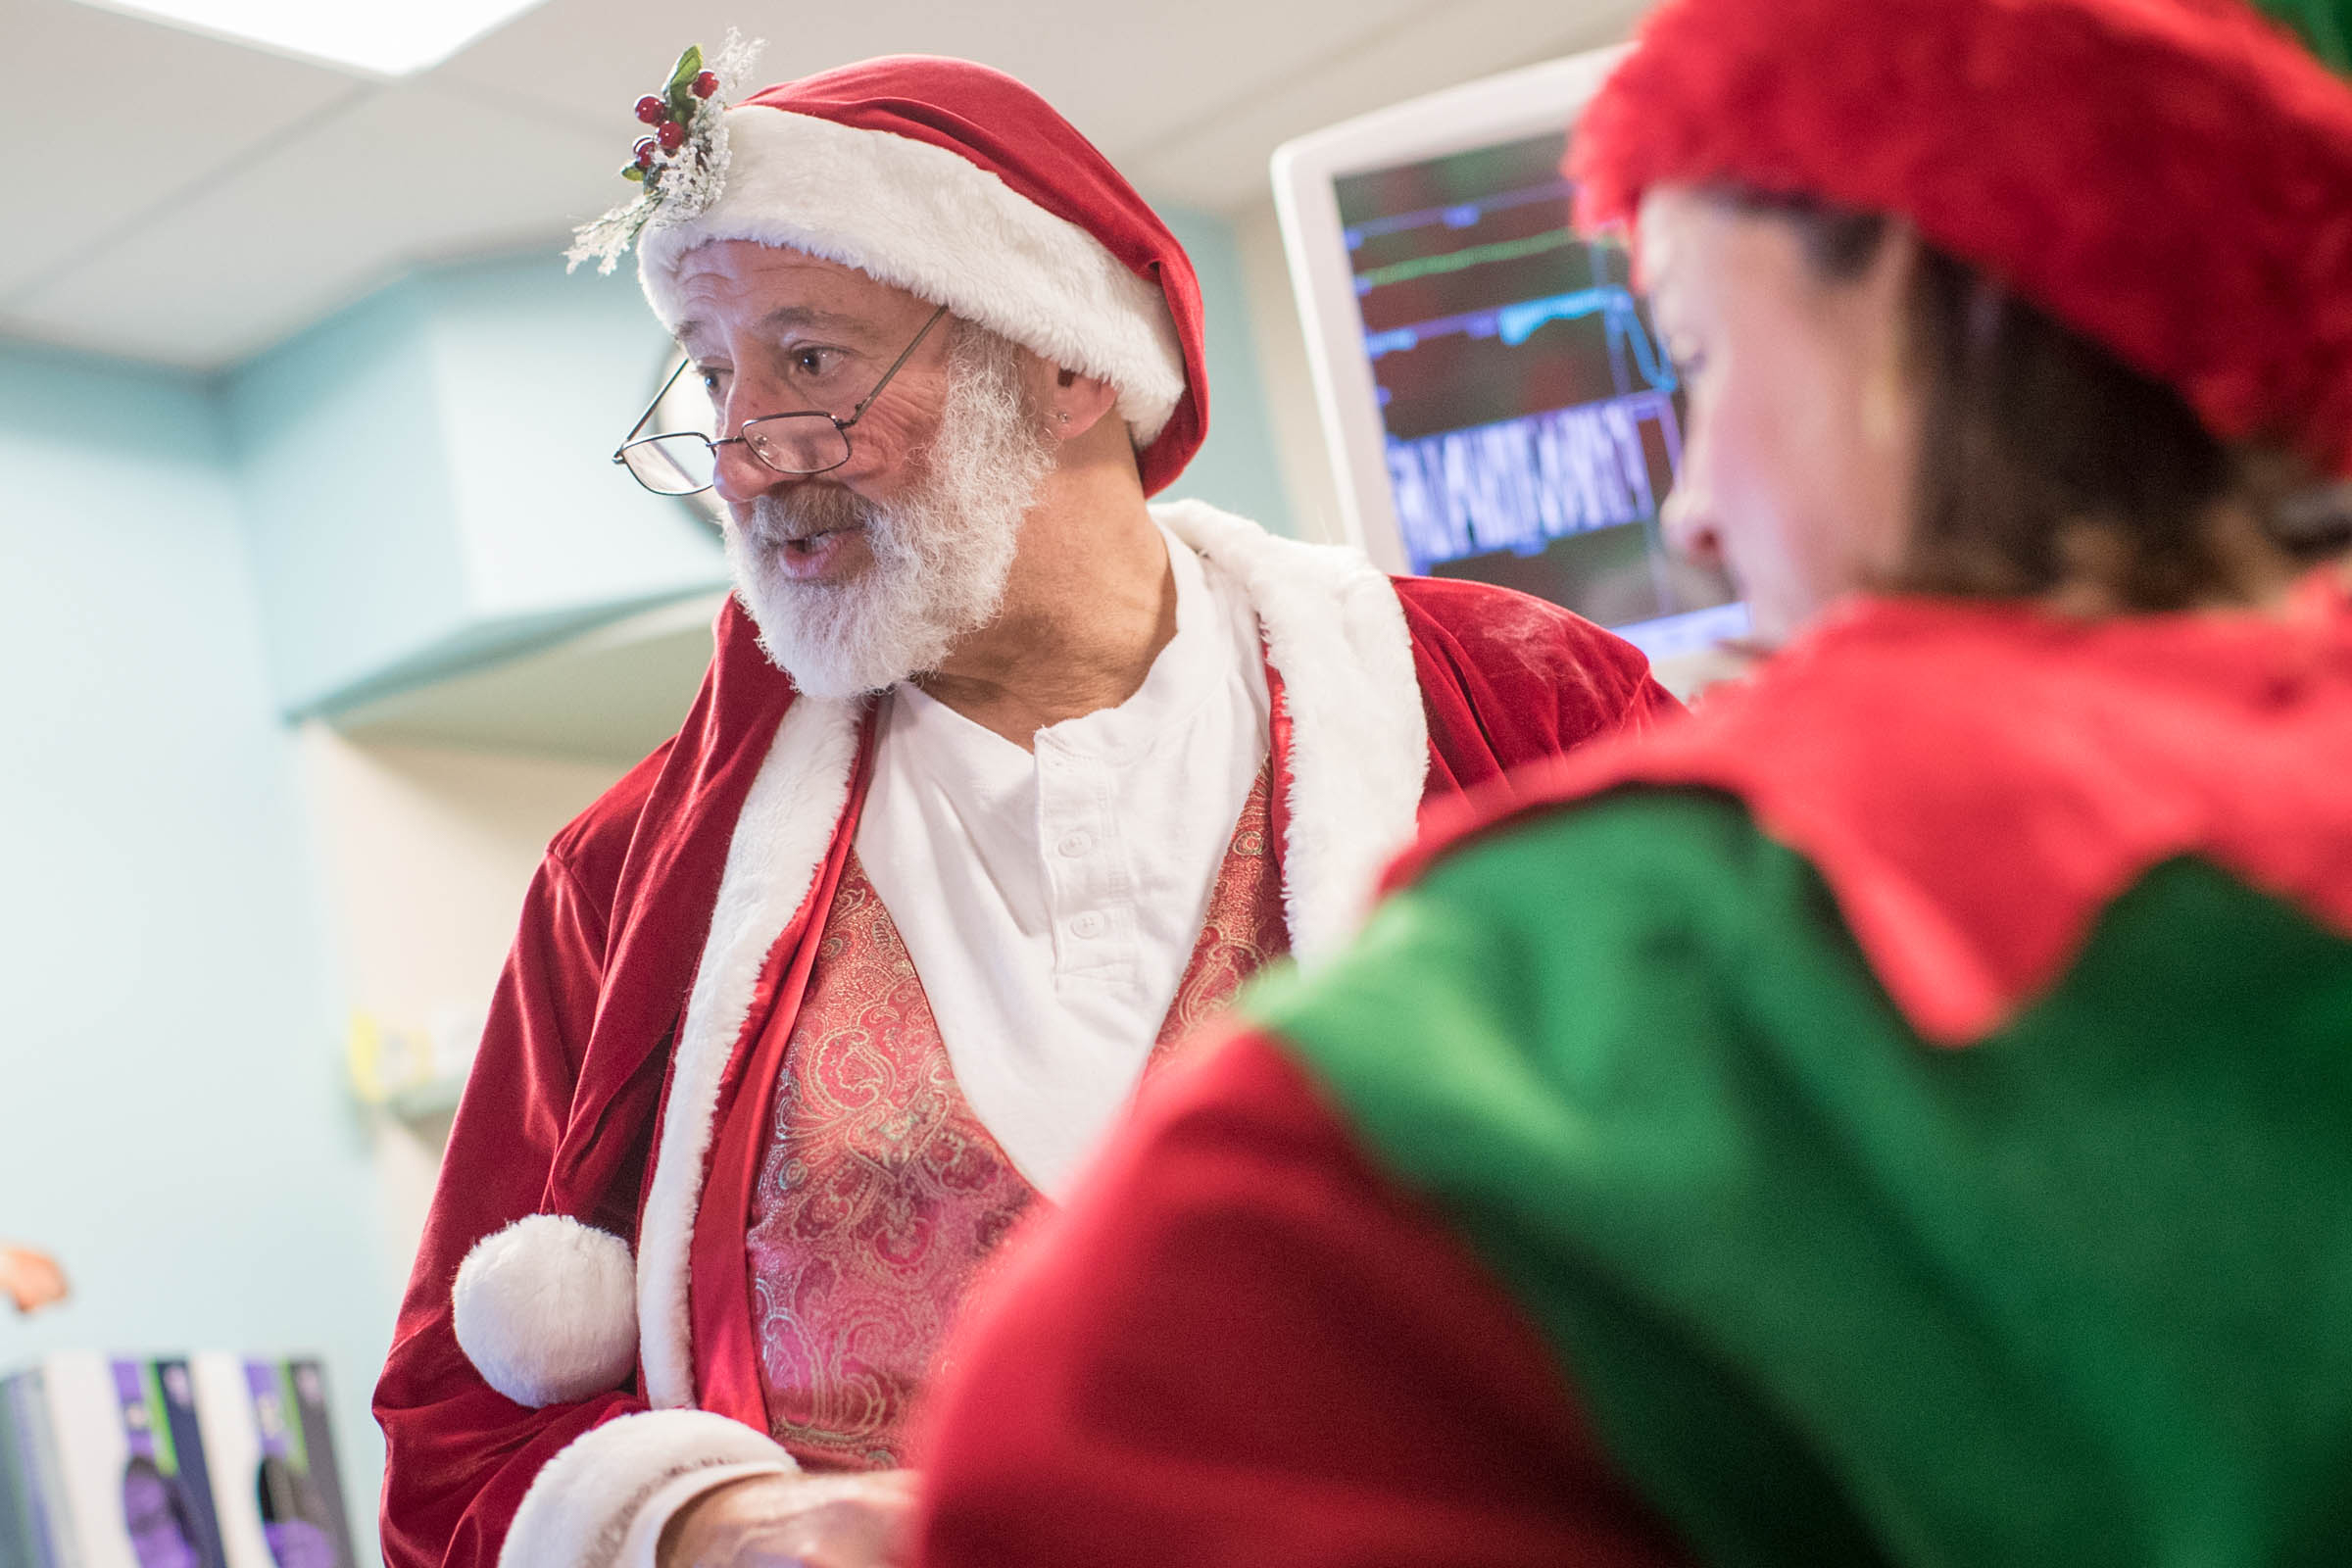 Dr. Robert Sinkin dressed as Santa